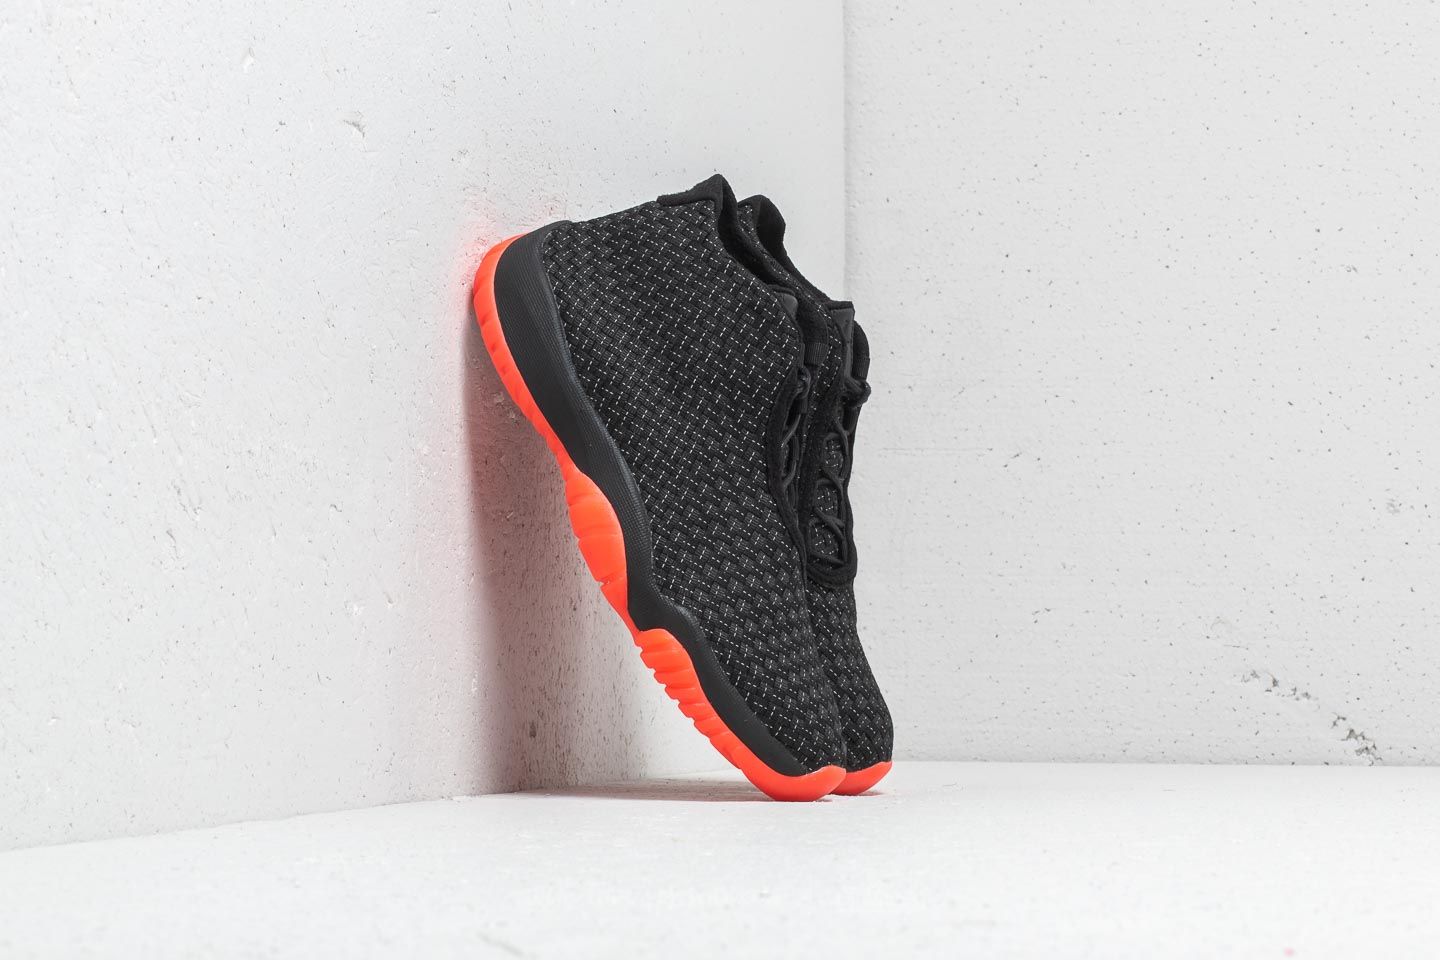 Zapatillas Hombre Air Jordan Future Premium "Infrared" Black/ Black-Infrared 23